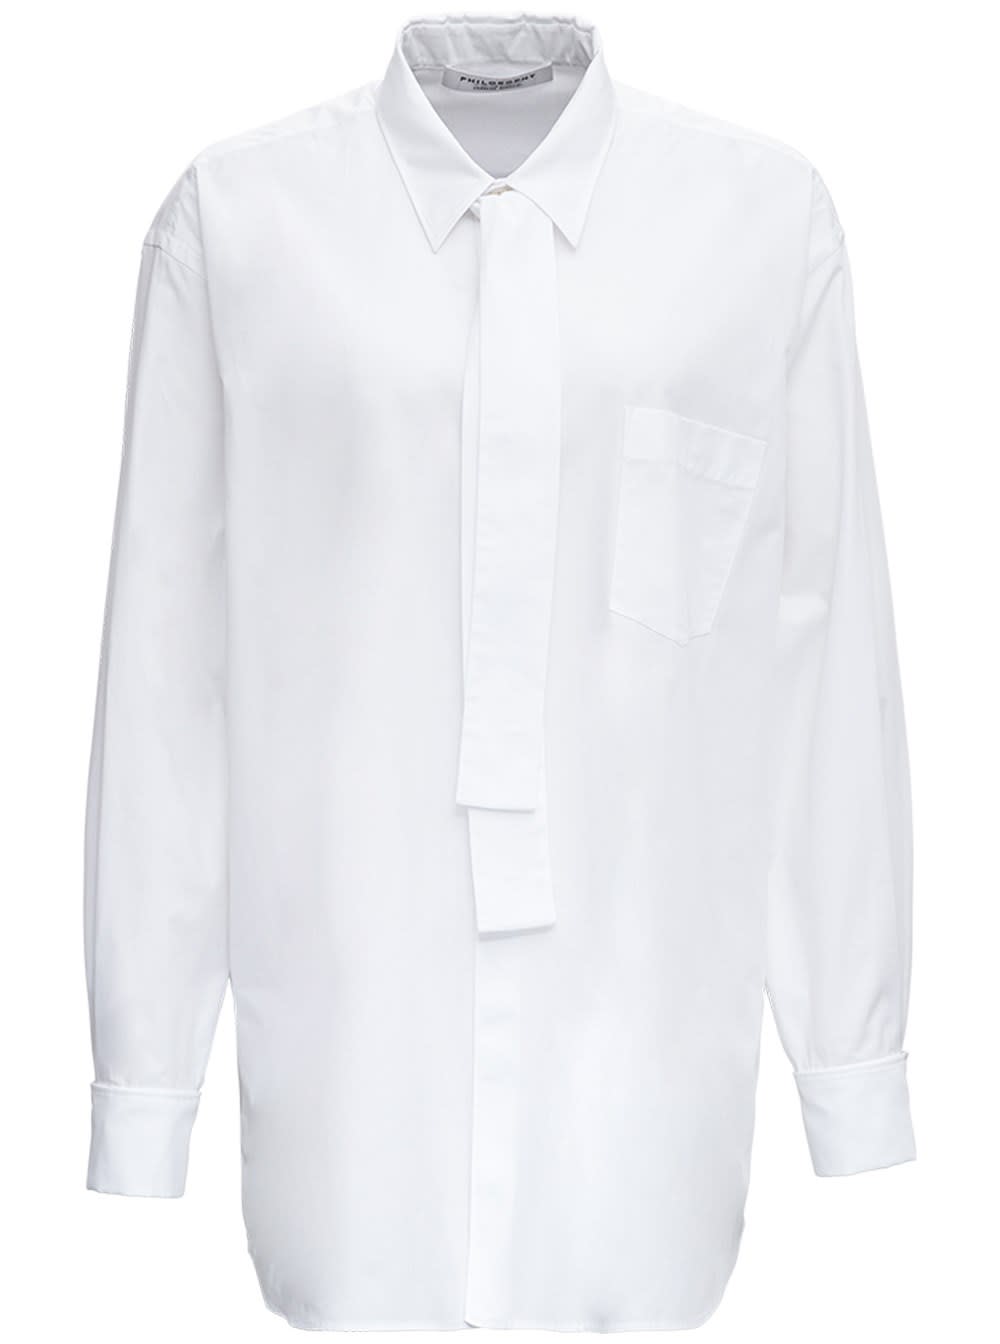 Philosophy di Lorenzo Serafini White Cotton Poplin Shirt